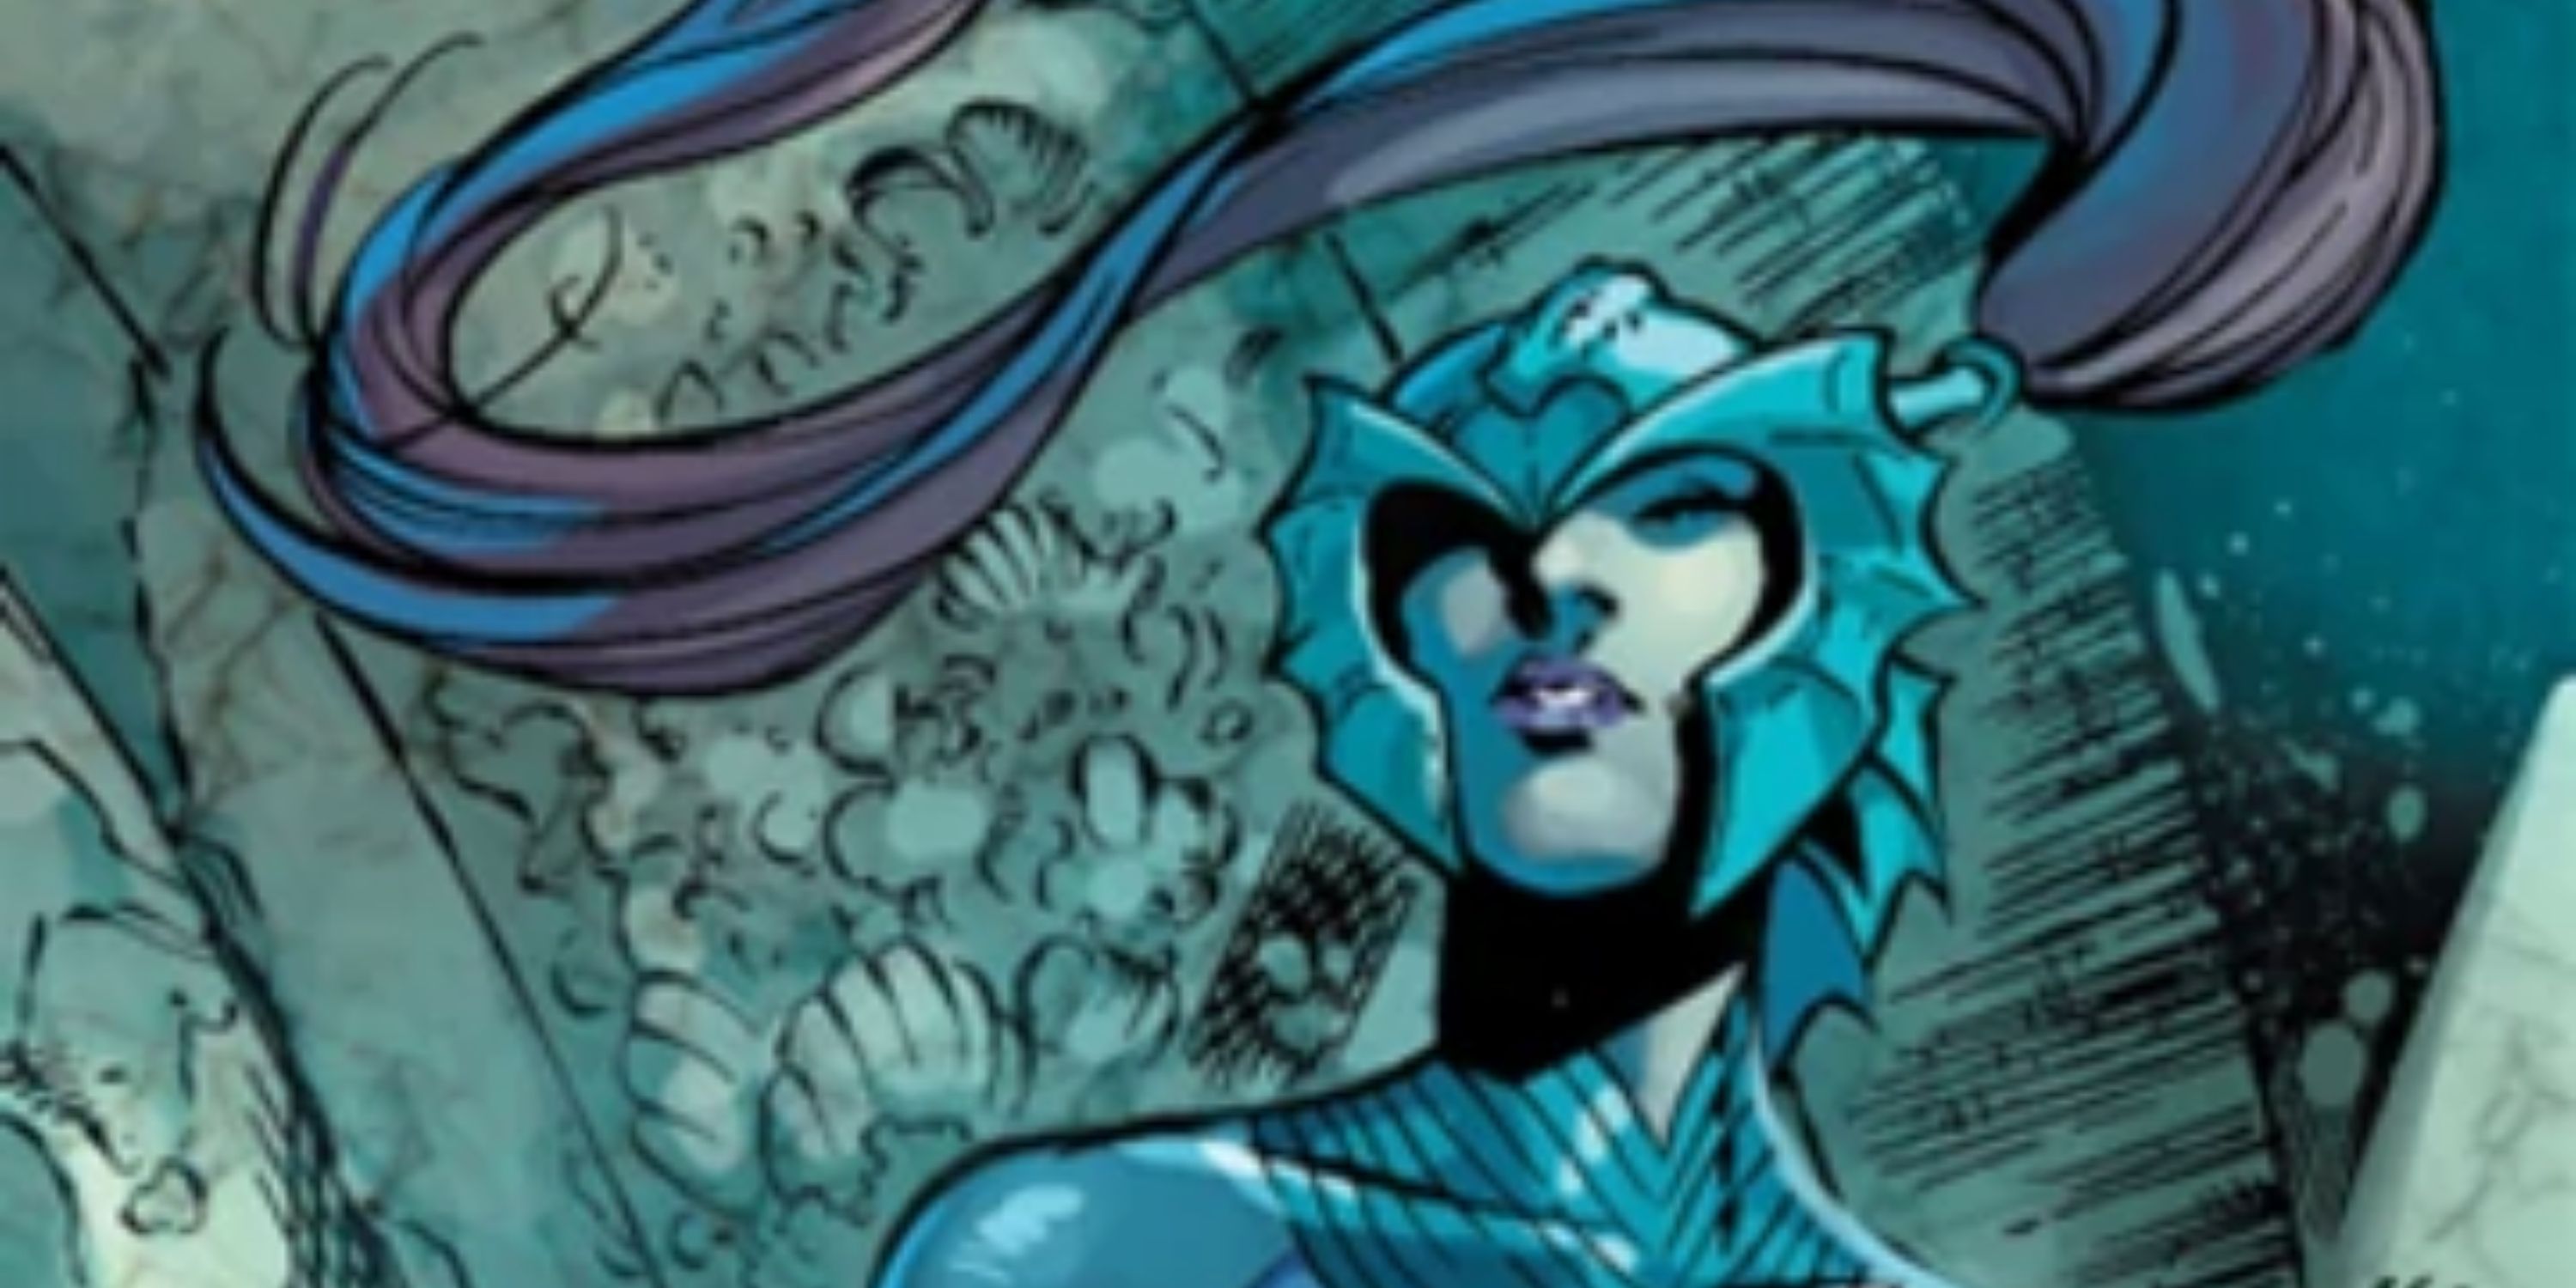 Tula aka Aquagirl in her armor